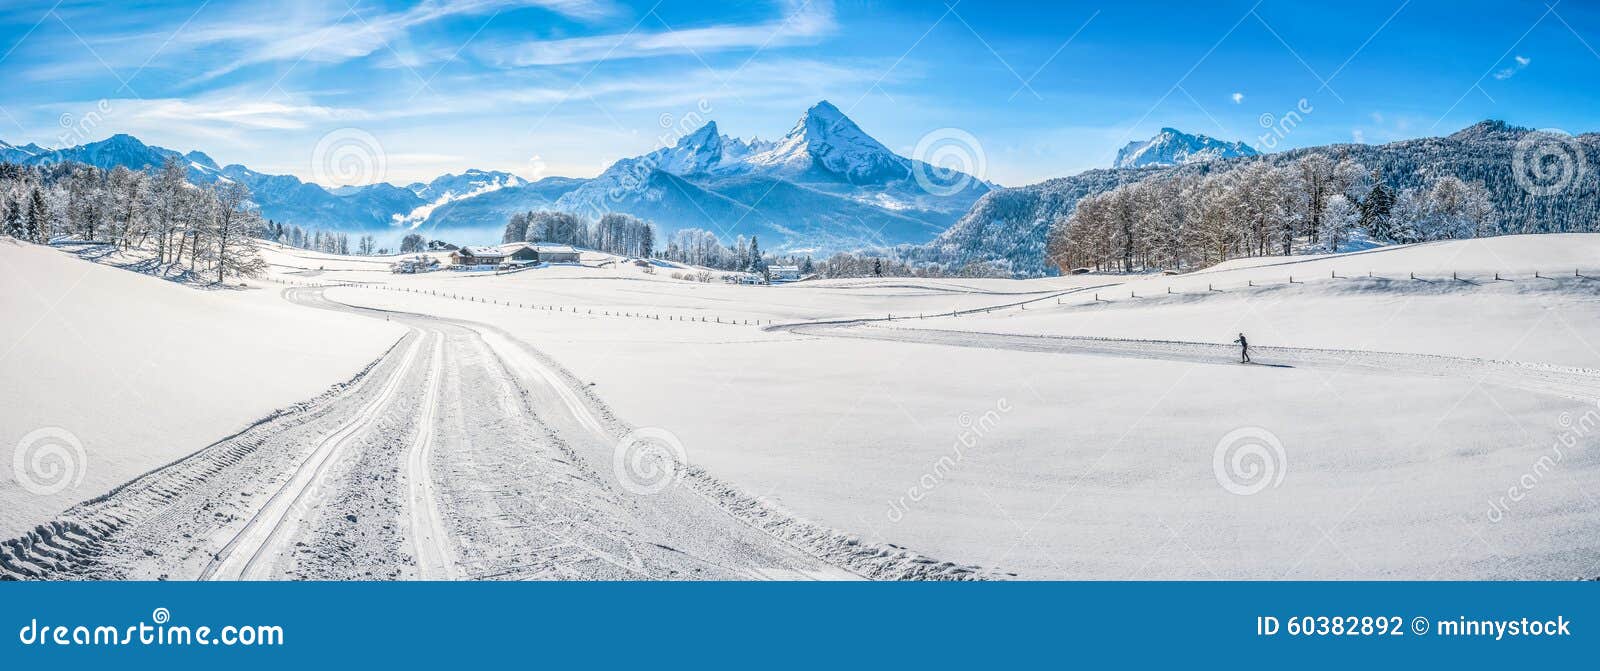 winter landscape in the bavarian alps with watzmann massif, germany